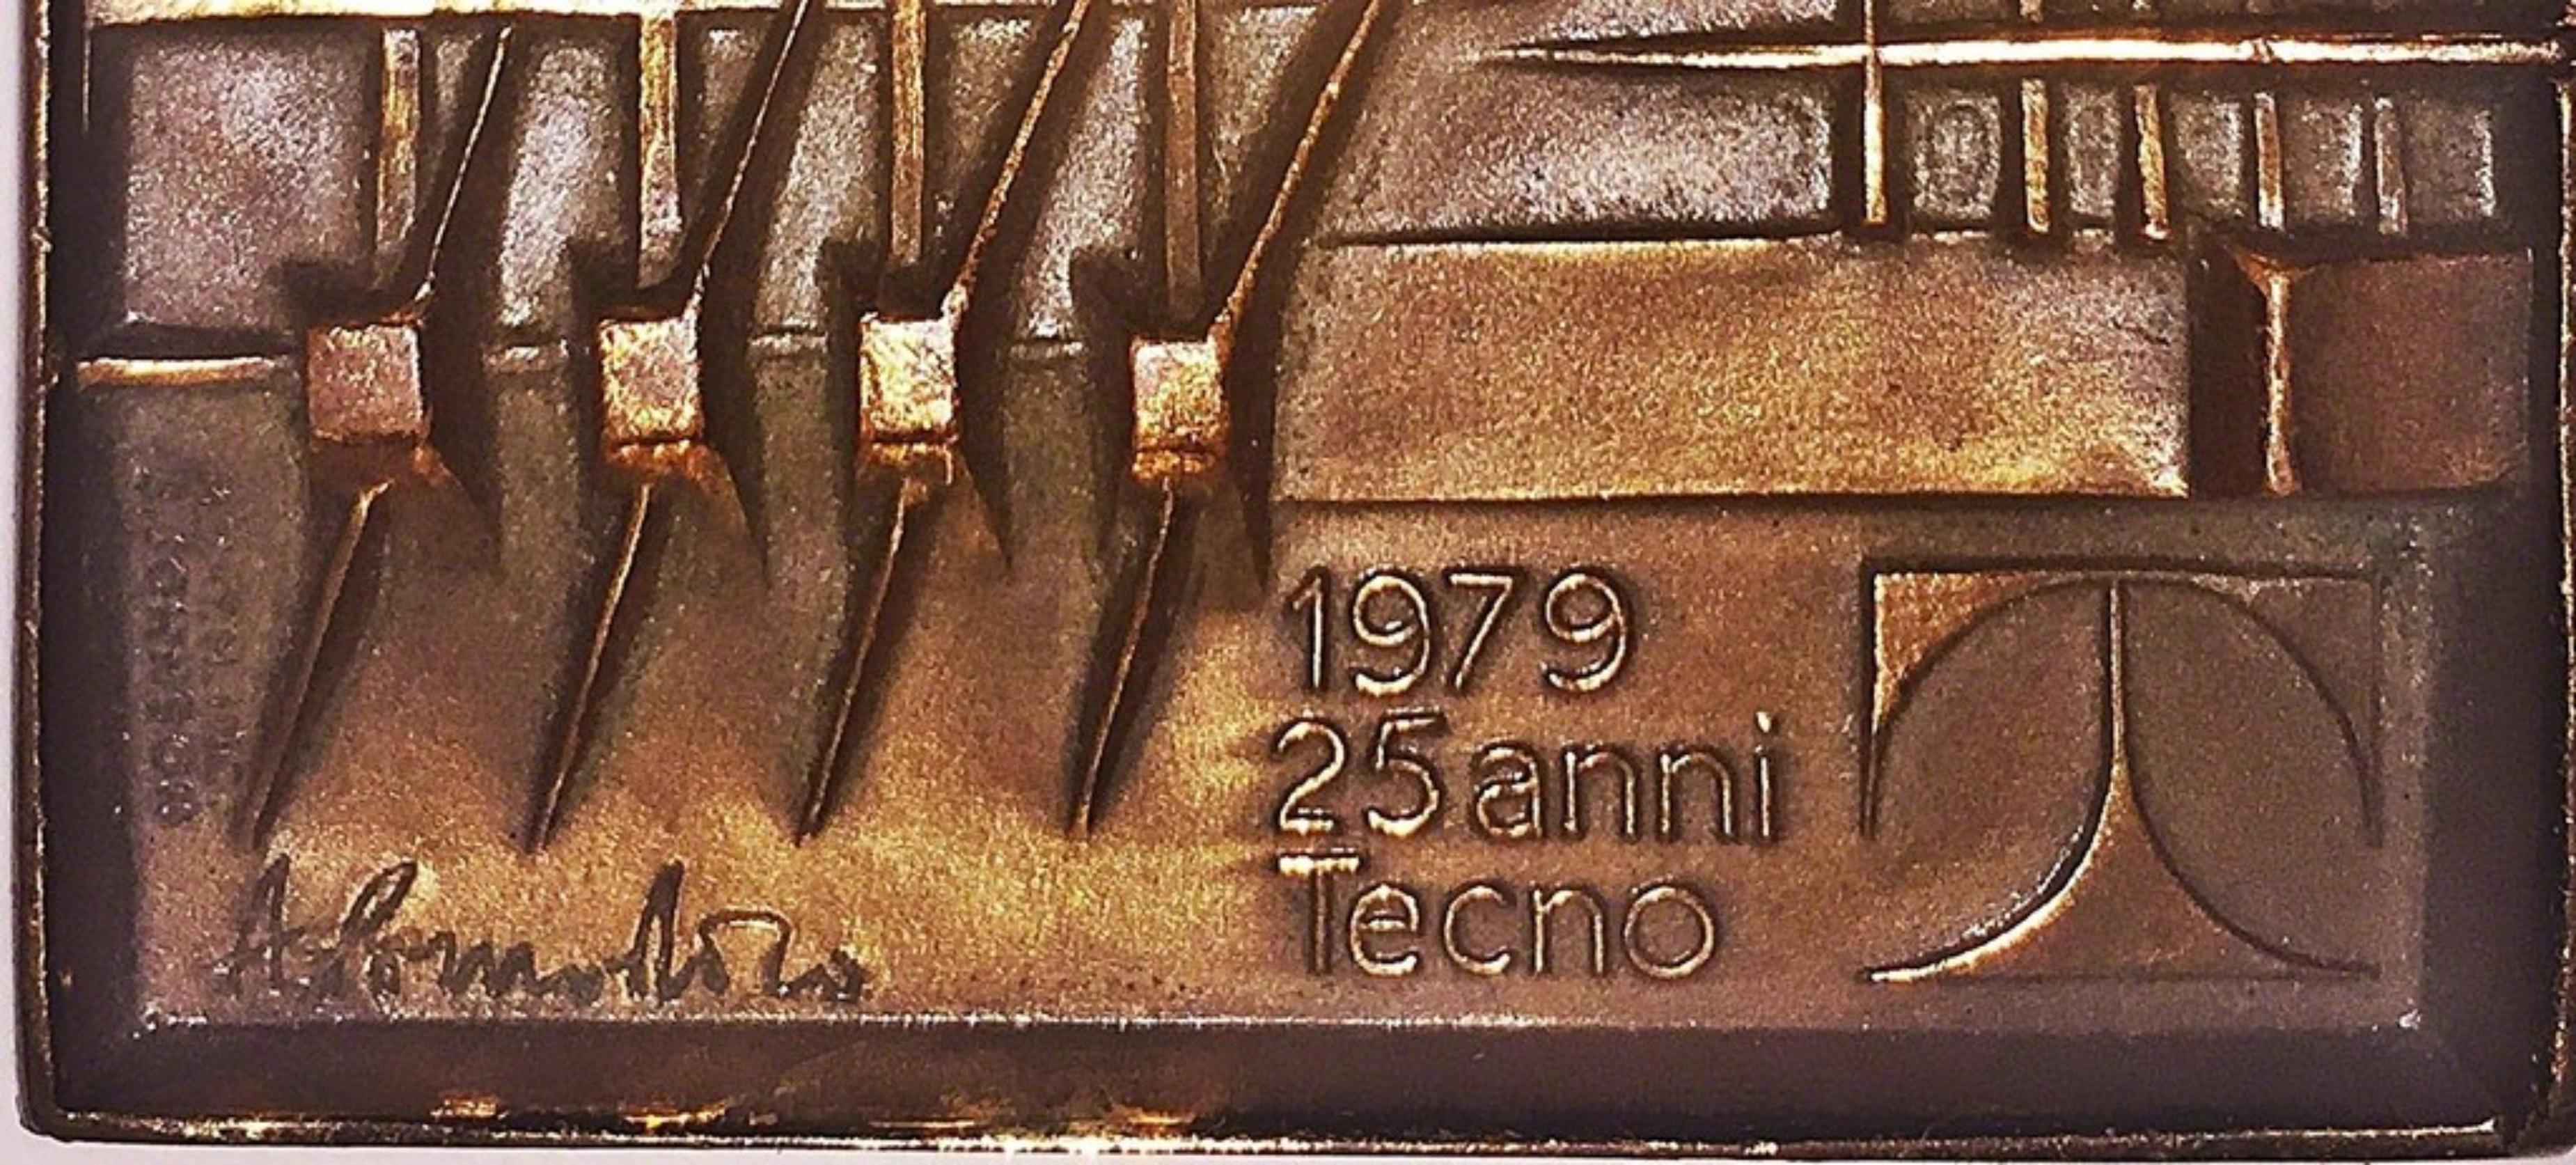 Medaglia 25 Anni Tecno Limited Edition bronze medallion plaque famous sculptor - Abstract Geometric Sculpture by Arnaldo Pomodoro